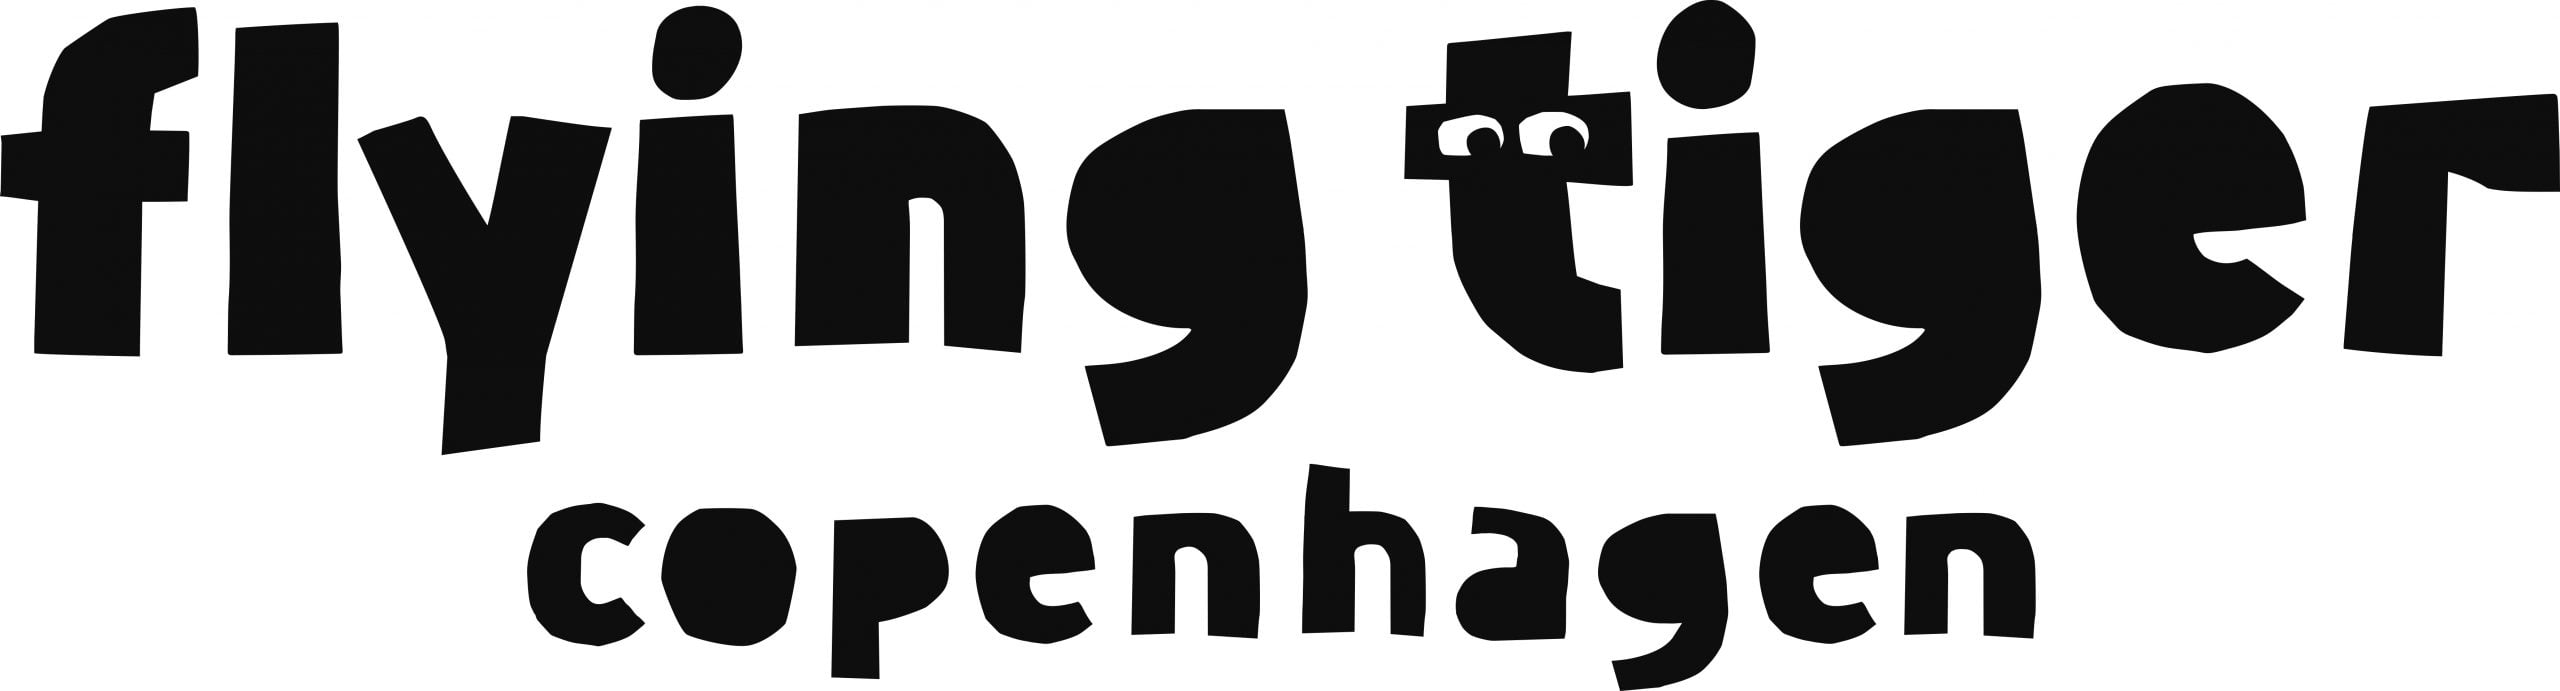 Flying_Tiger_Copenhagen_wide_black_overprint_logo-scaled